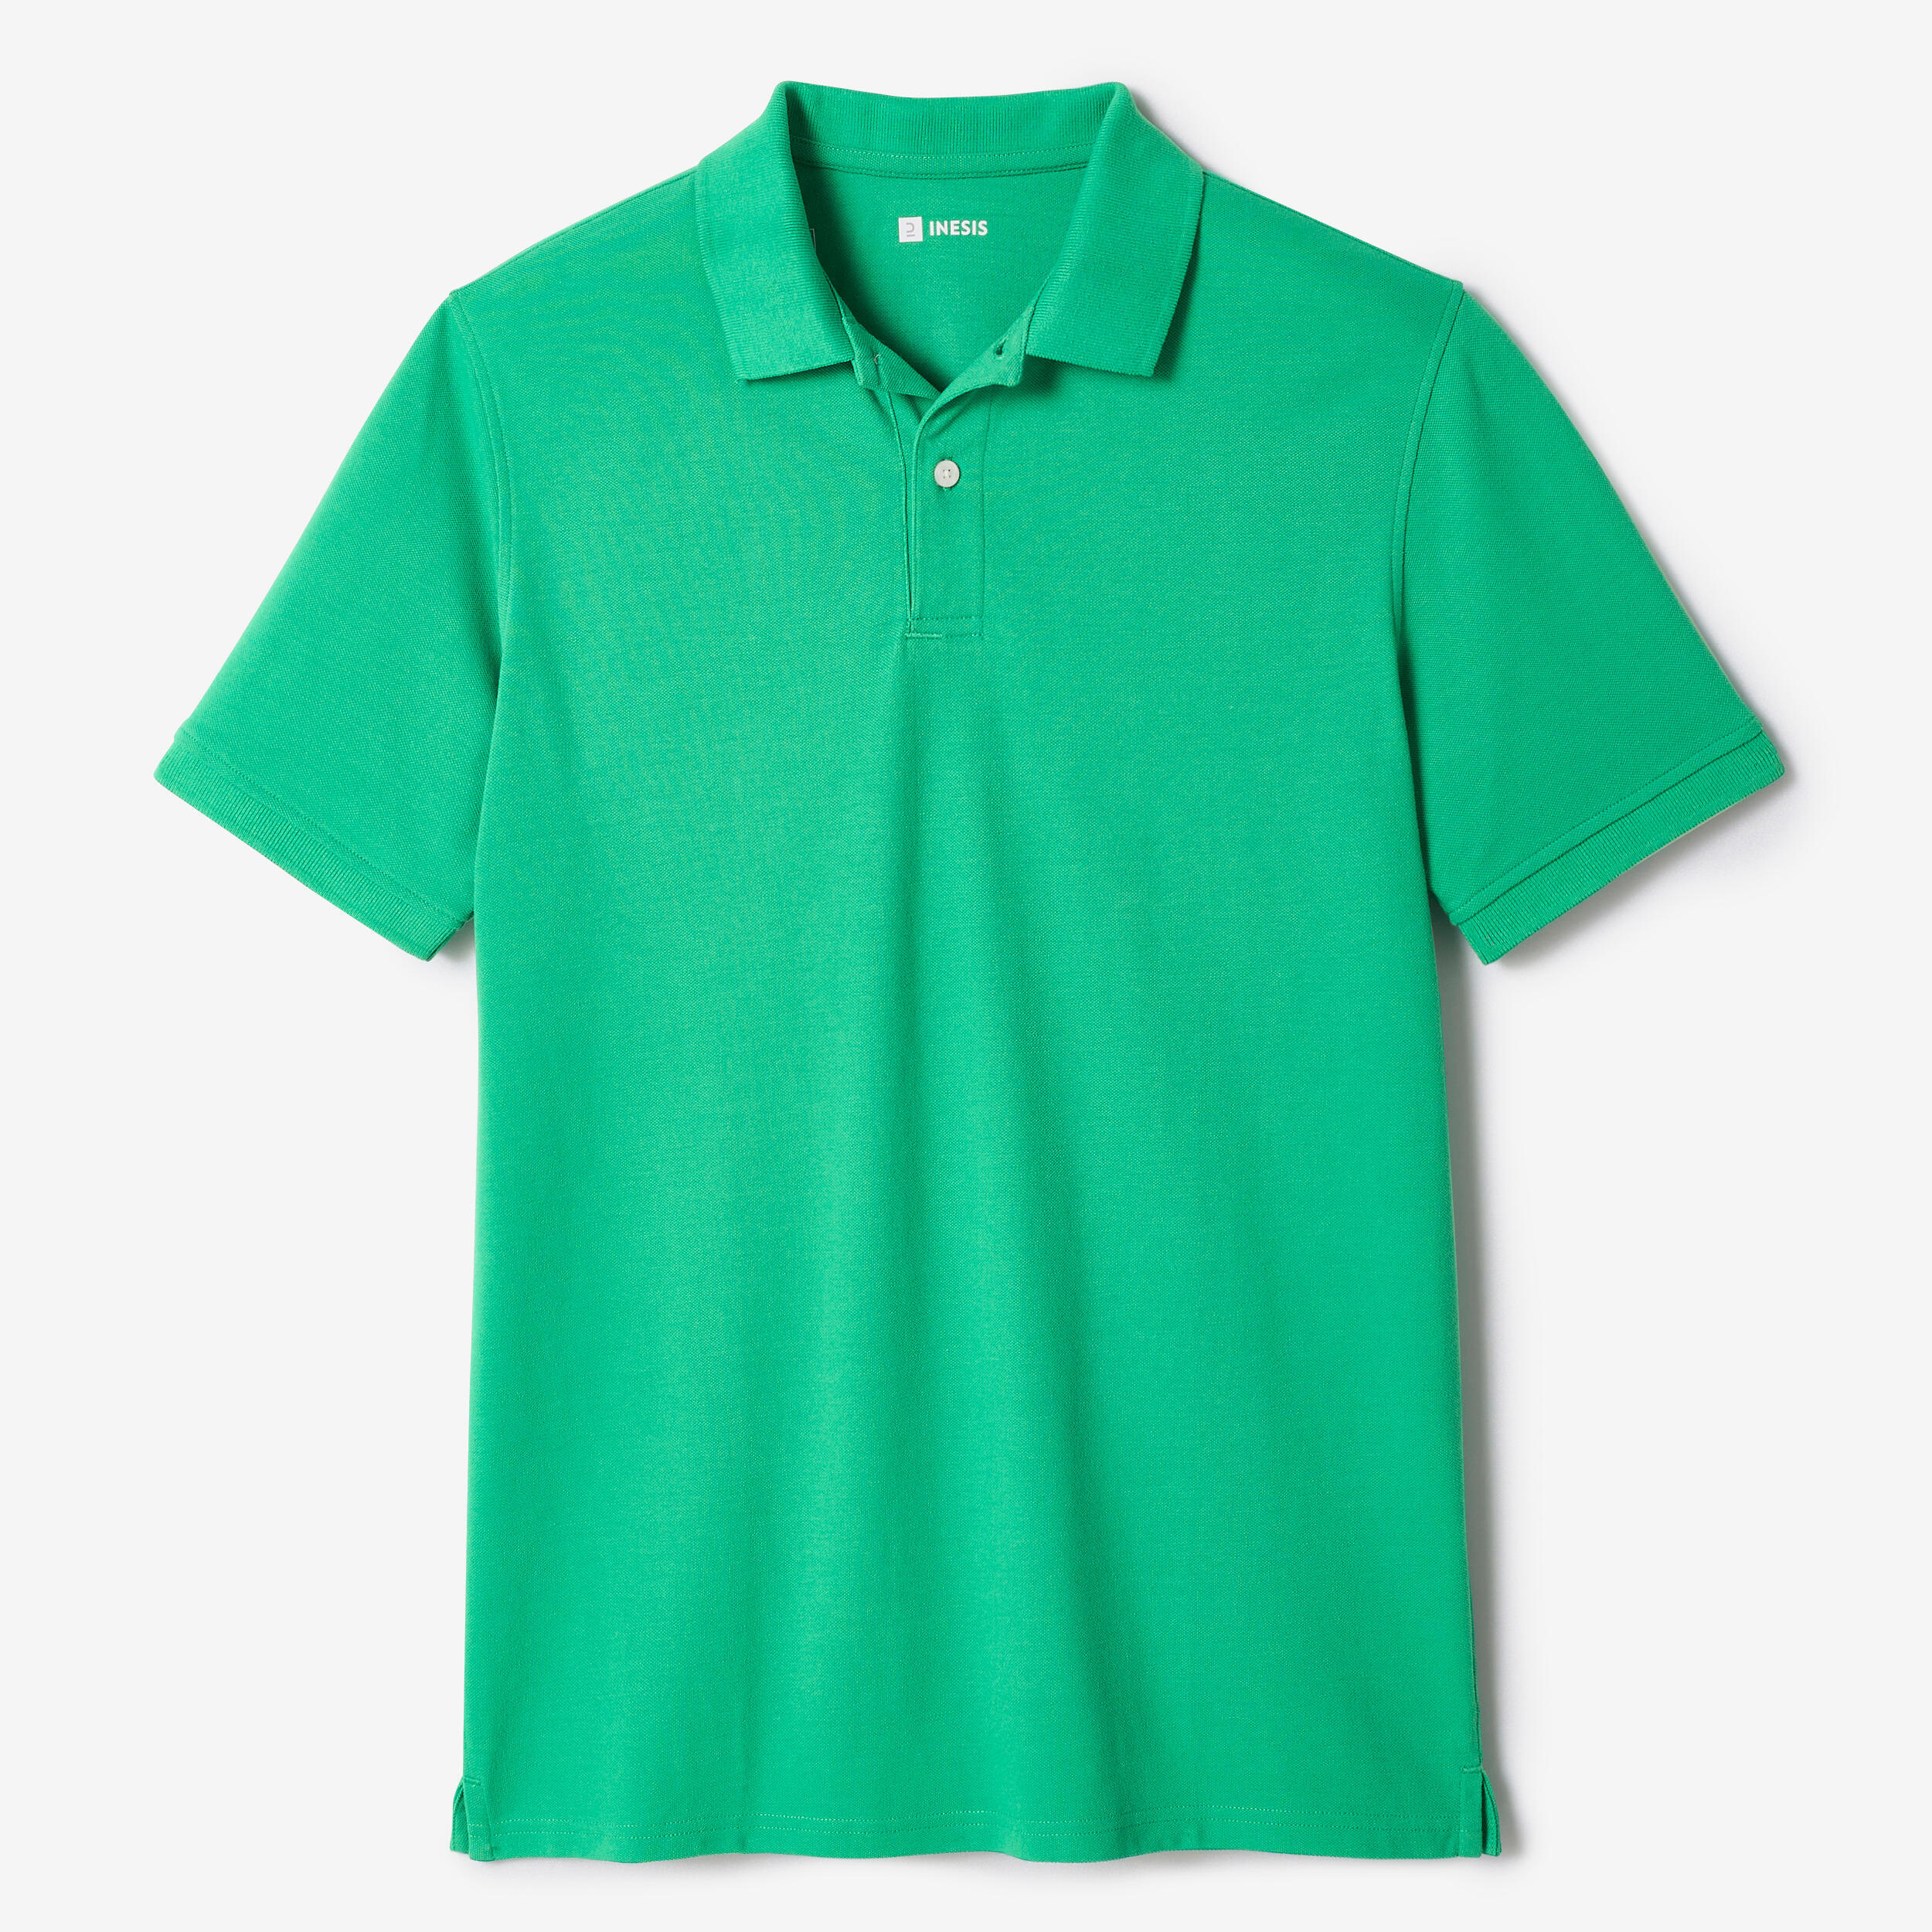 INESIS Refurbished Mens short-sleeved golf polo shirt - A Grade